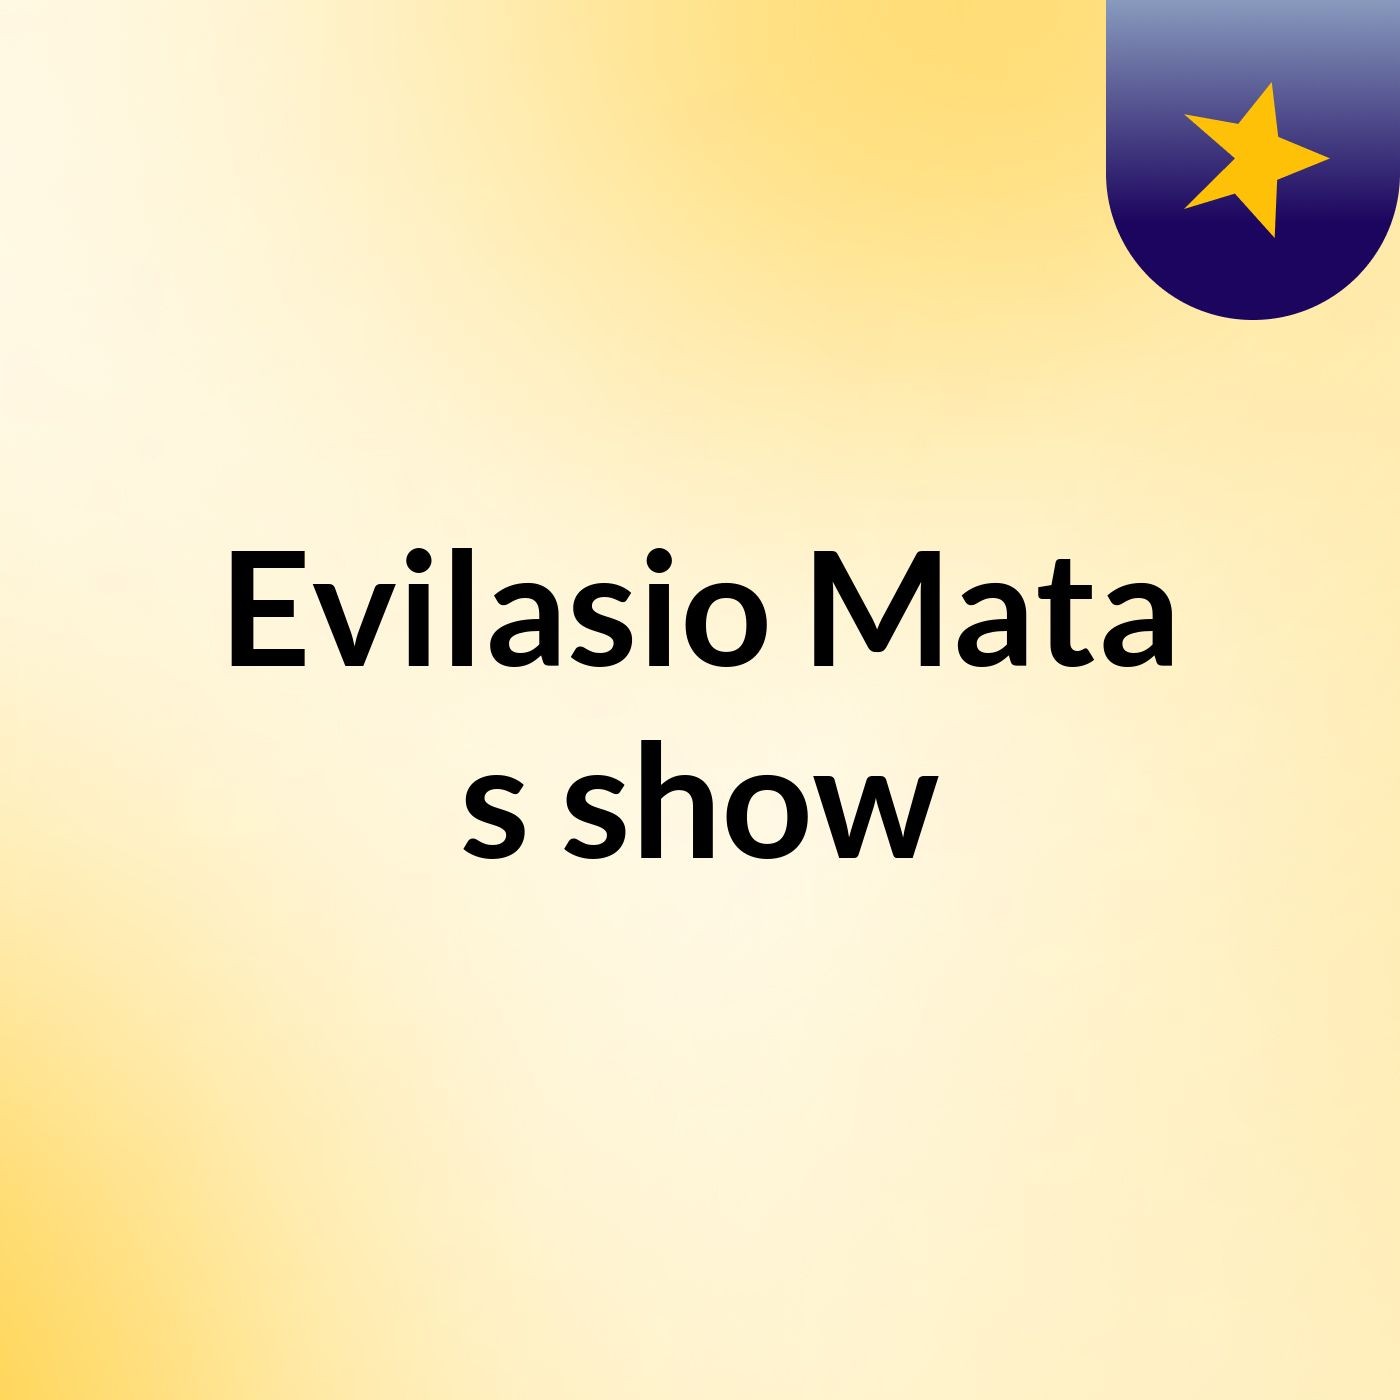 Evilasio Mata's show